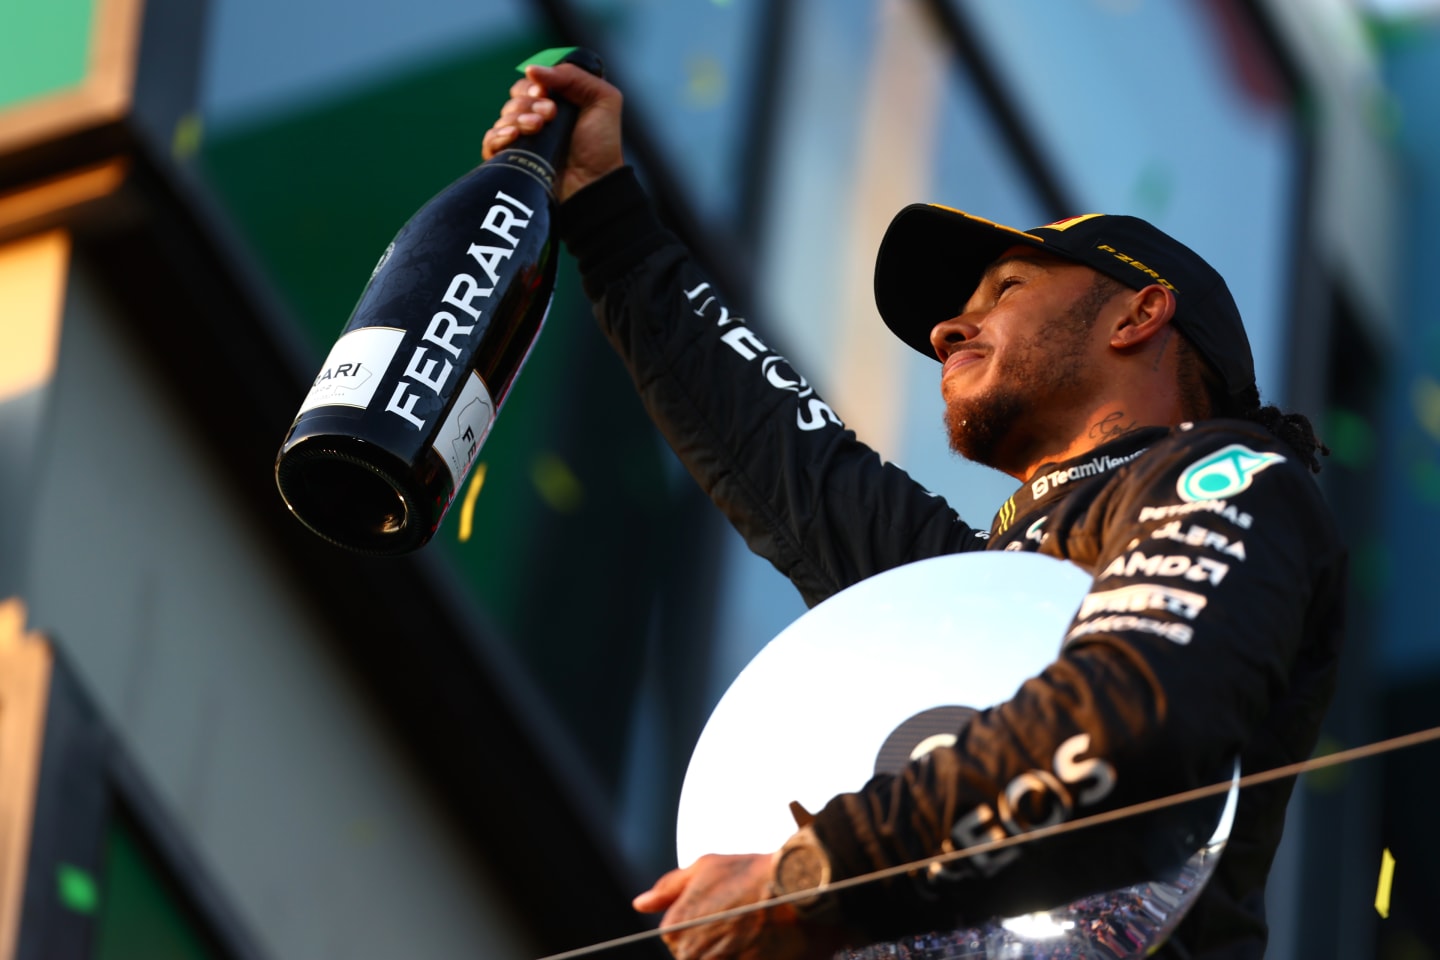 MELBOURNE, AUSTRALIA - APRIL 02: Second placed Lewis Hamilton of Great Britain and Mercedes